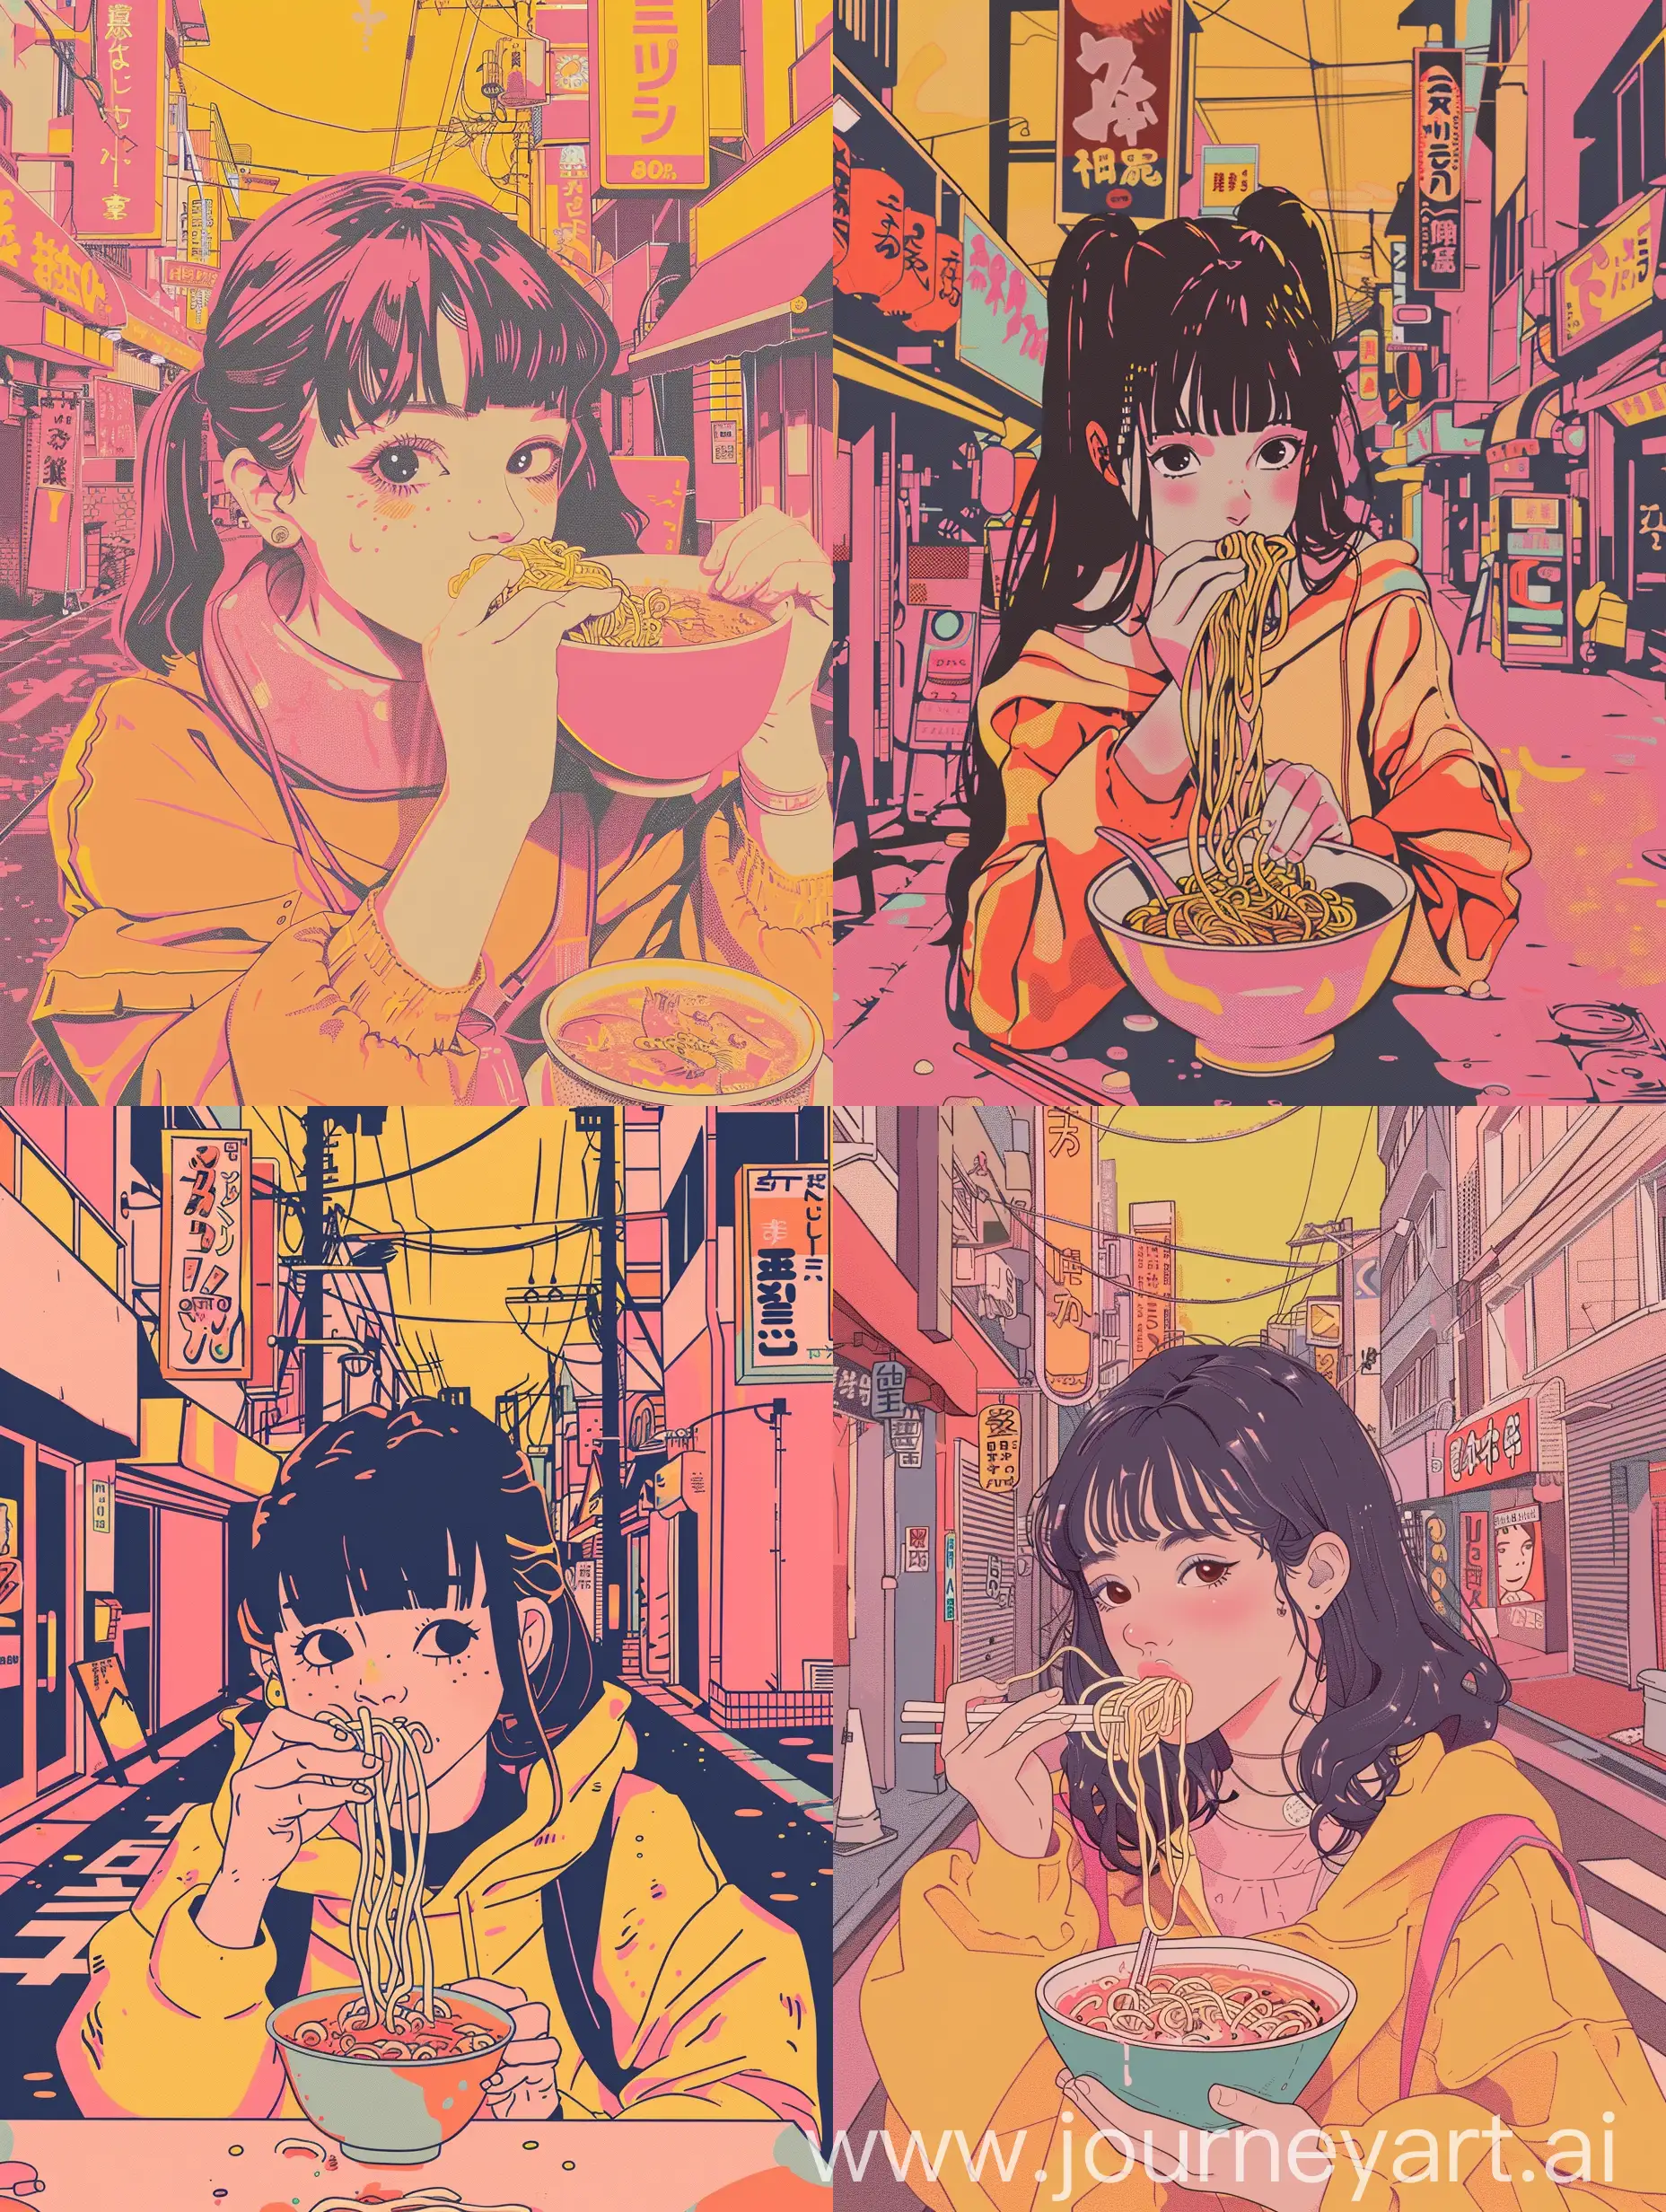 80s-Japanese-Anime-Style-Girl-Eating-Ramen-in-Muted-Colors-Street-Scene